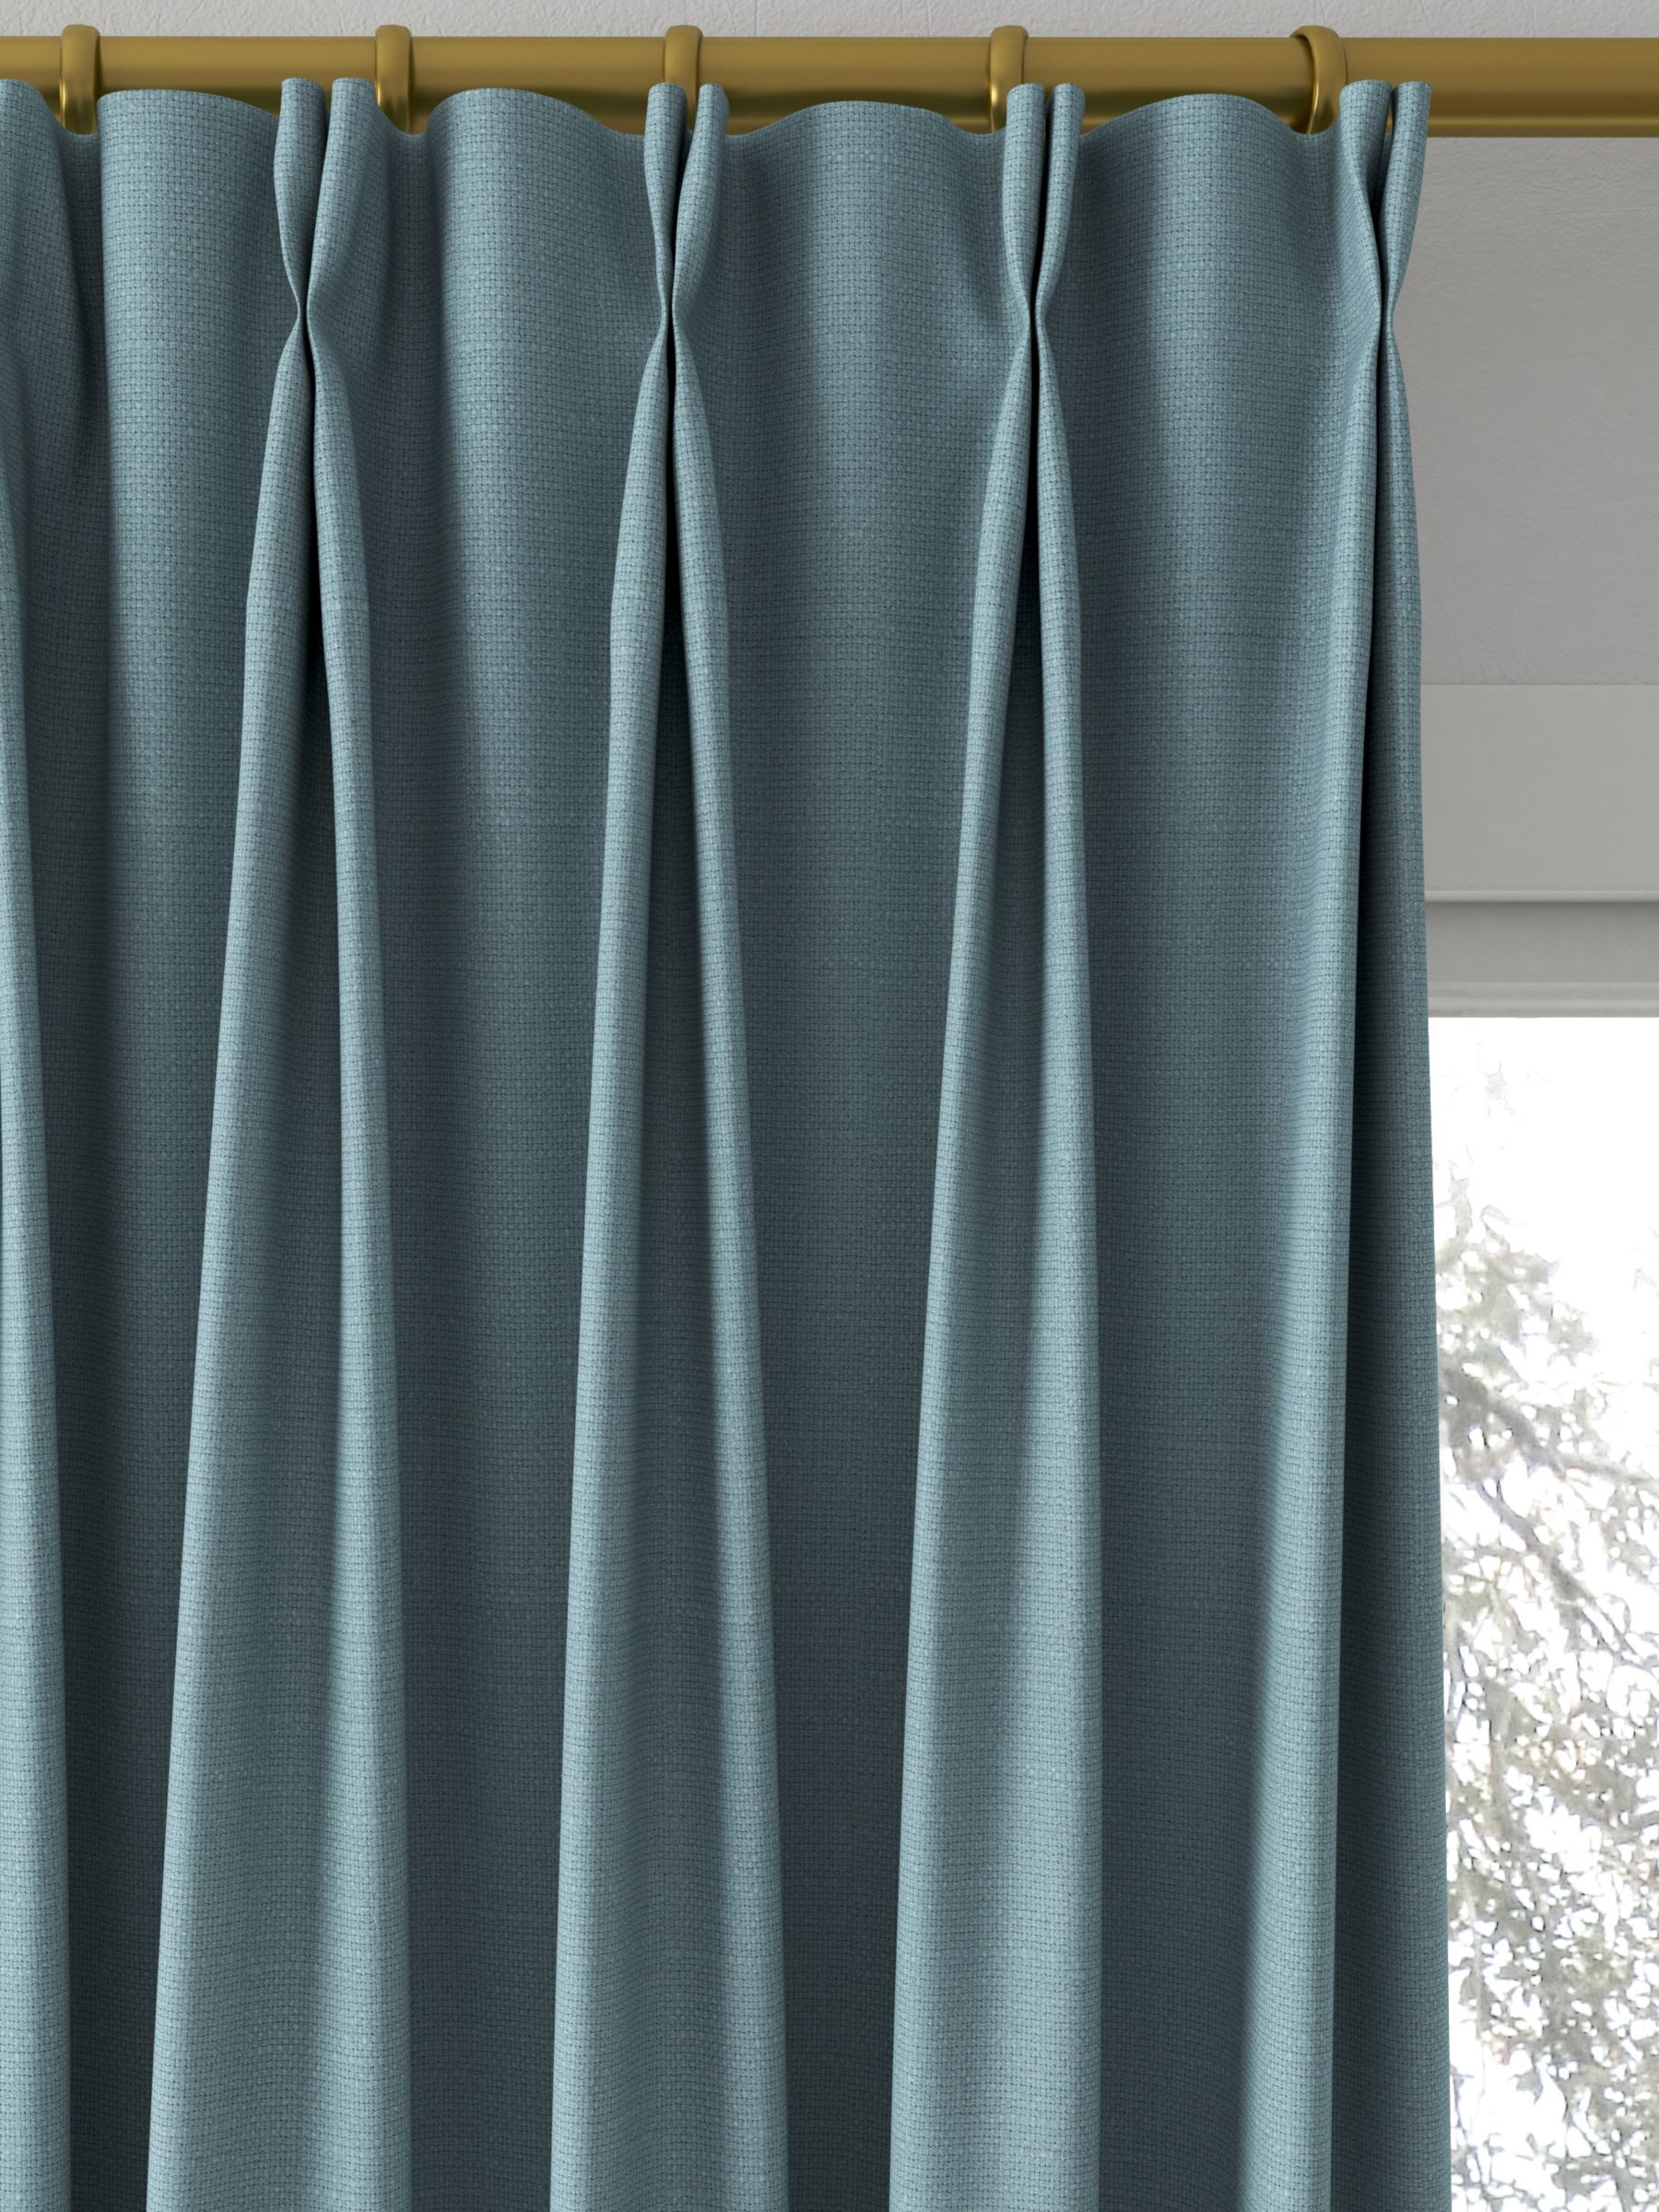 Sanderson Tuscany II Made to Measure Curtains, Aquamarine